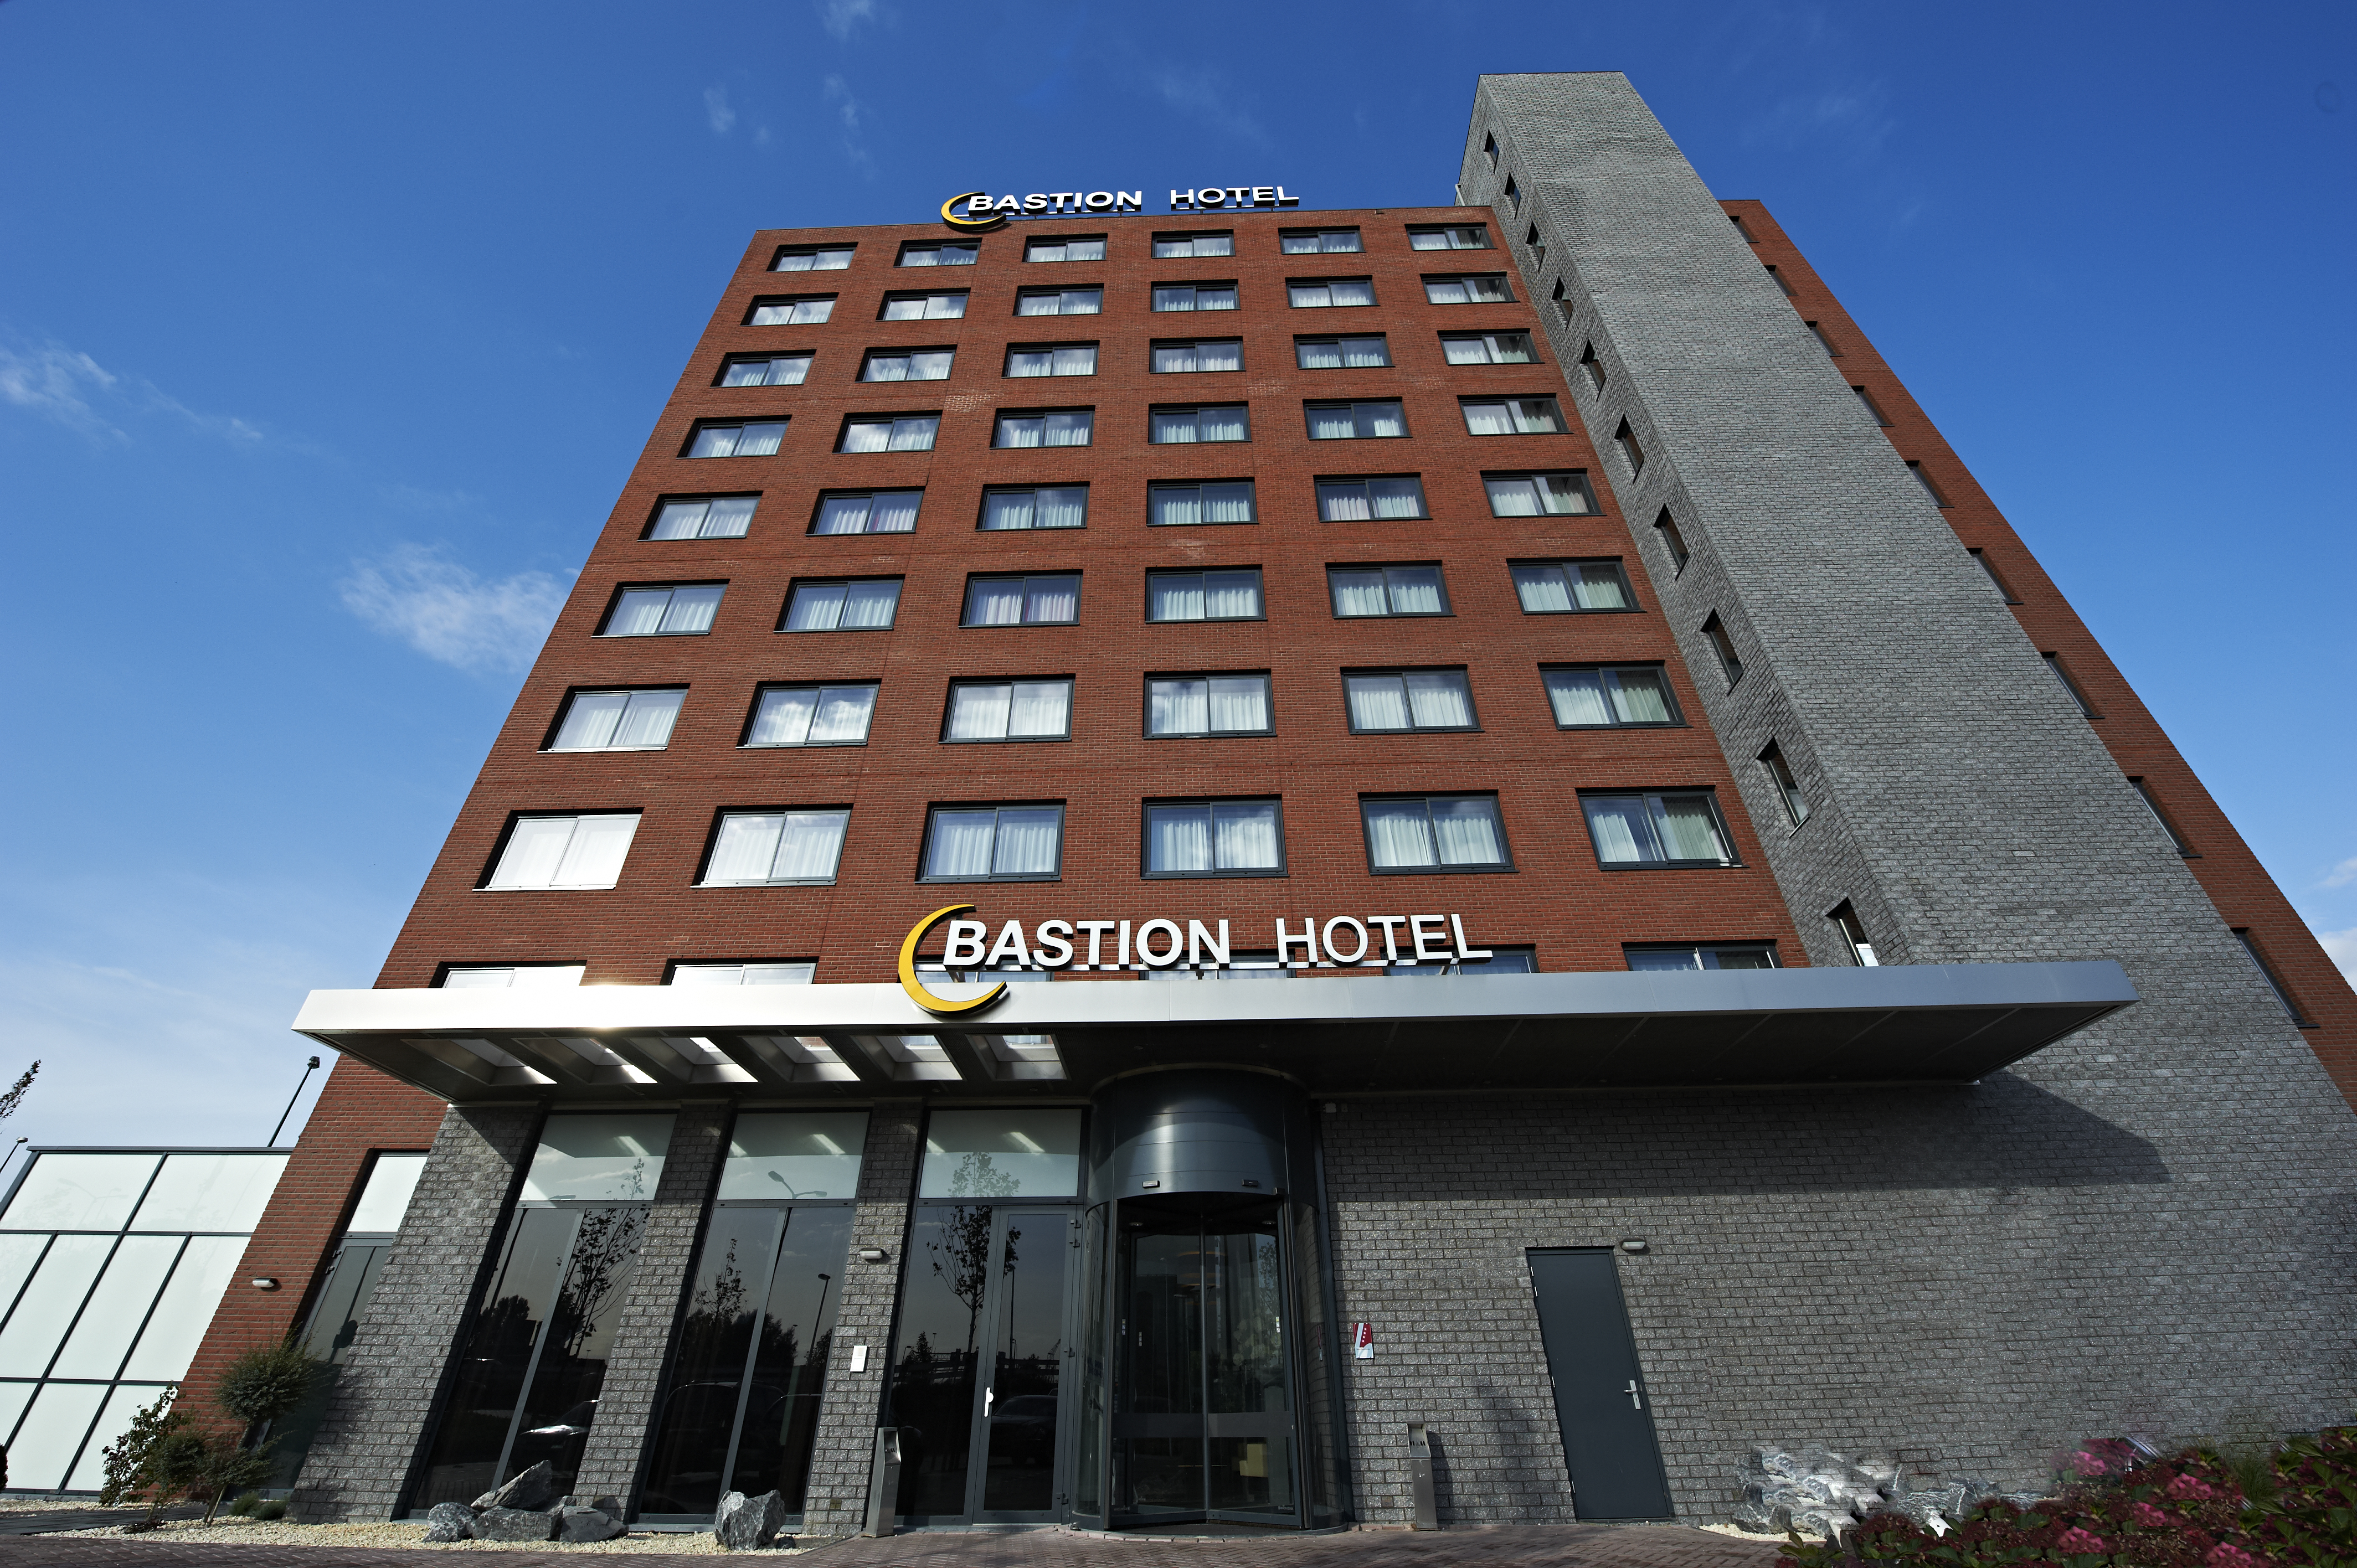 Bastion Hotel Vlaardingen <br/>64.00 ew <br/> <a href='http://vakantieoplossing.nl/outpage/?id=341db708cc7daa7f3929e9ef9f9a4494' target='_blank'>View Details</a>